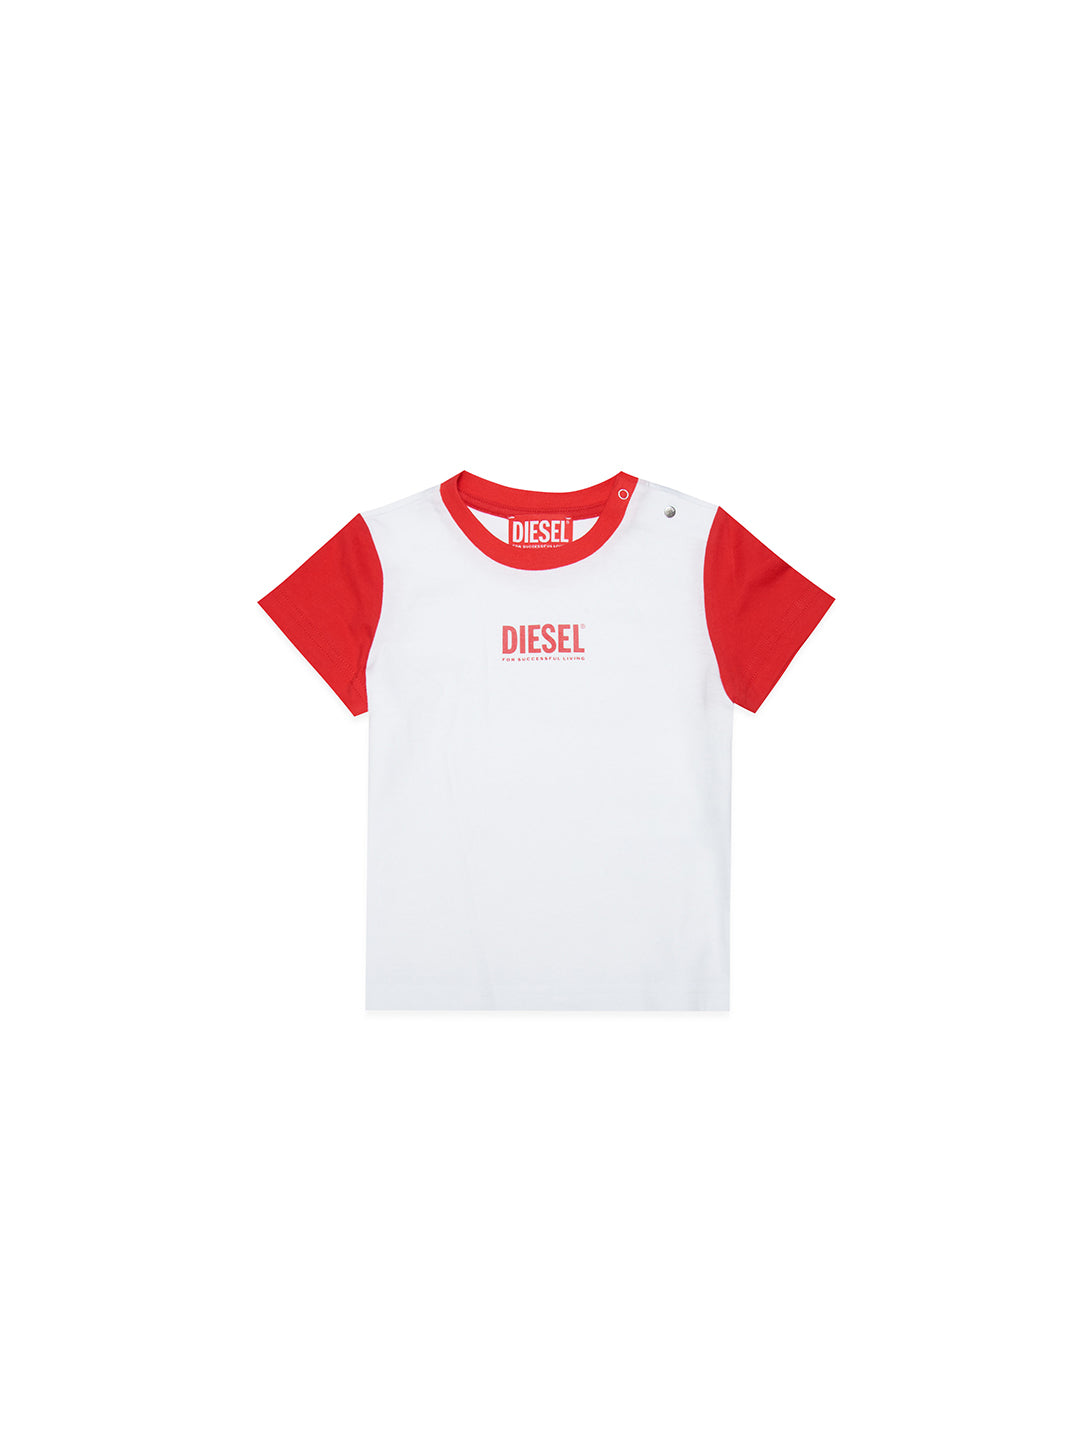 Diesel t shirt bianca e rossa neonati